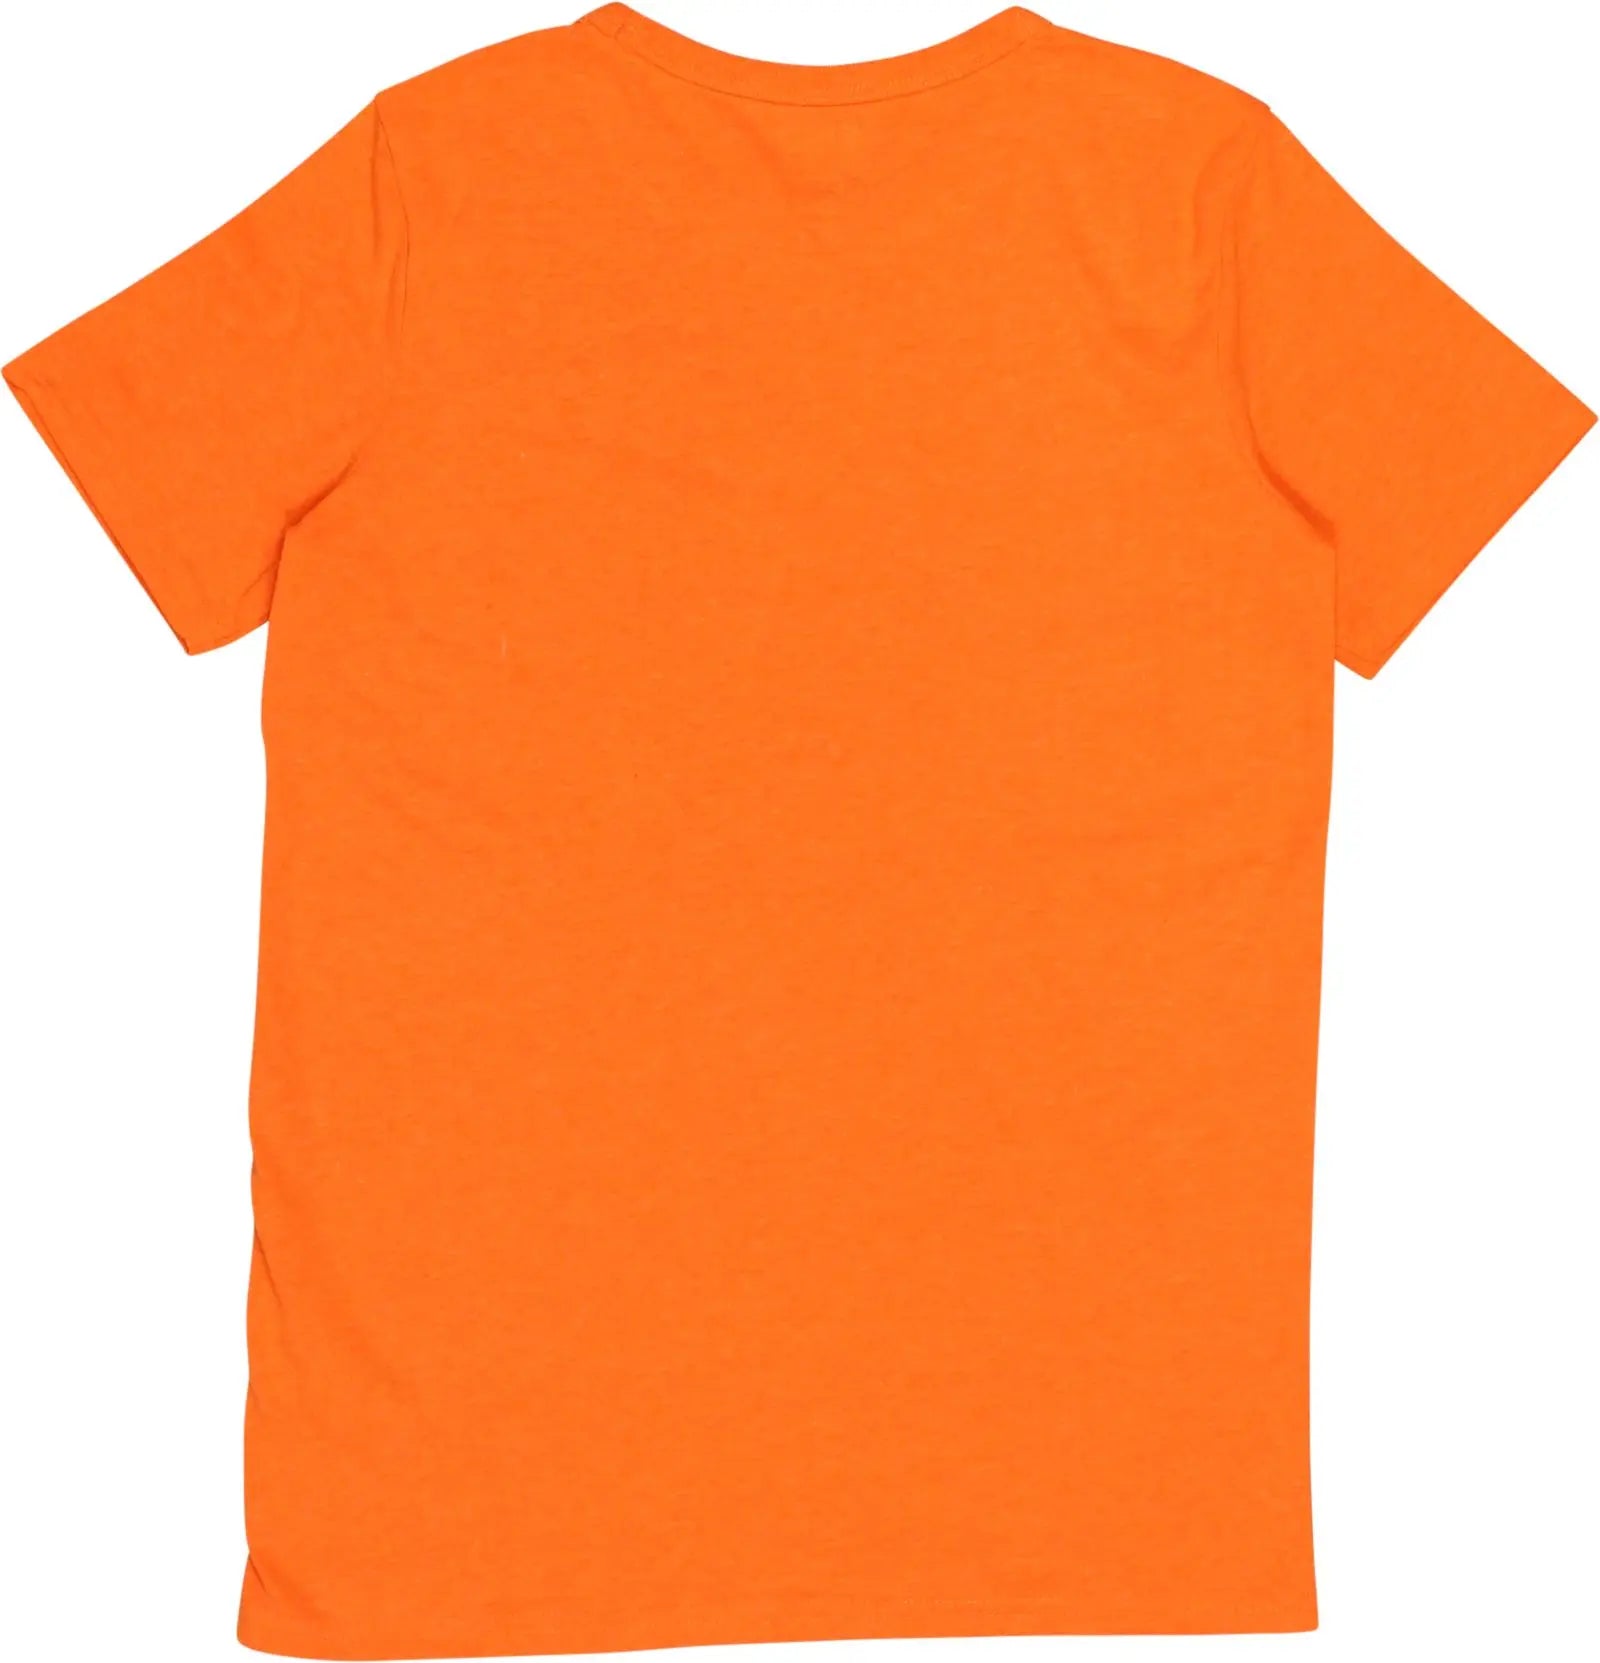 HEMA - Orange T-shirt- ThriftTale.com - Vintage and second handclothing